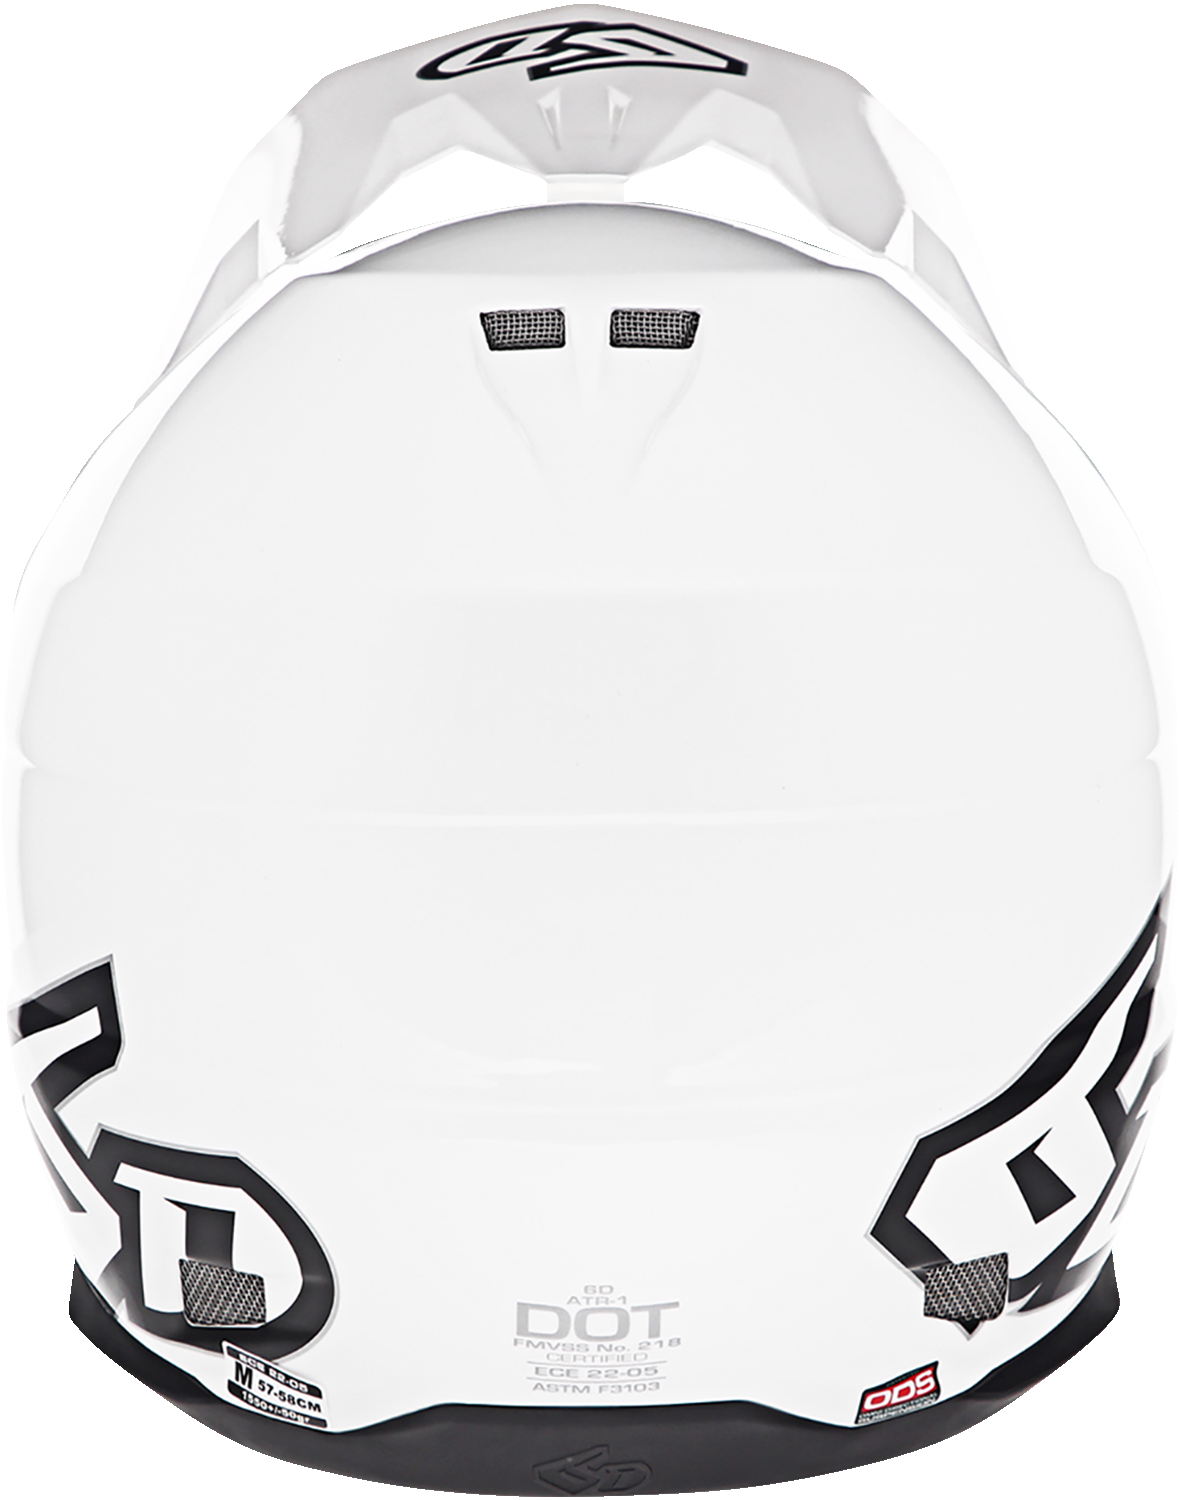 6D ATR-1 Helmet - White - Large 10-3727